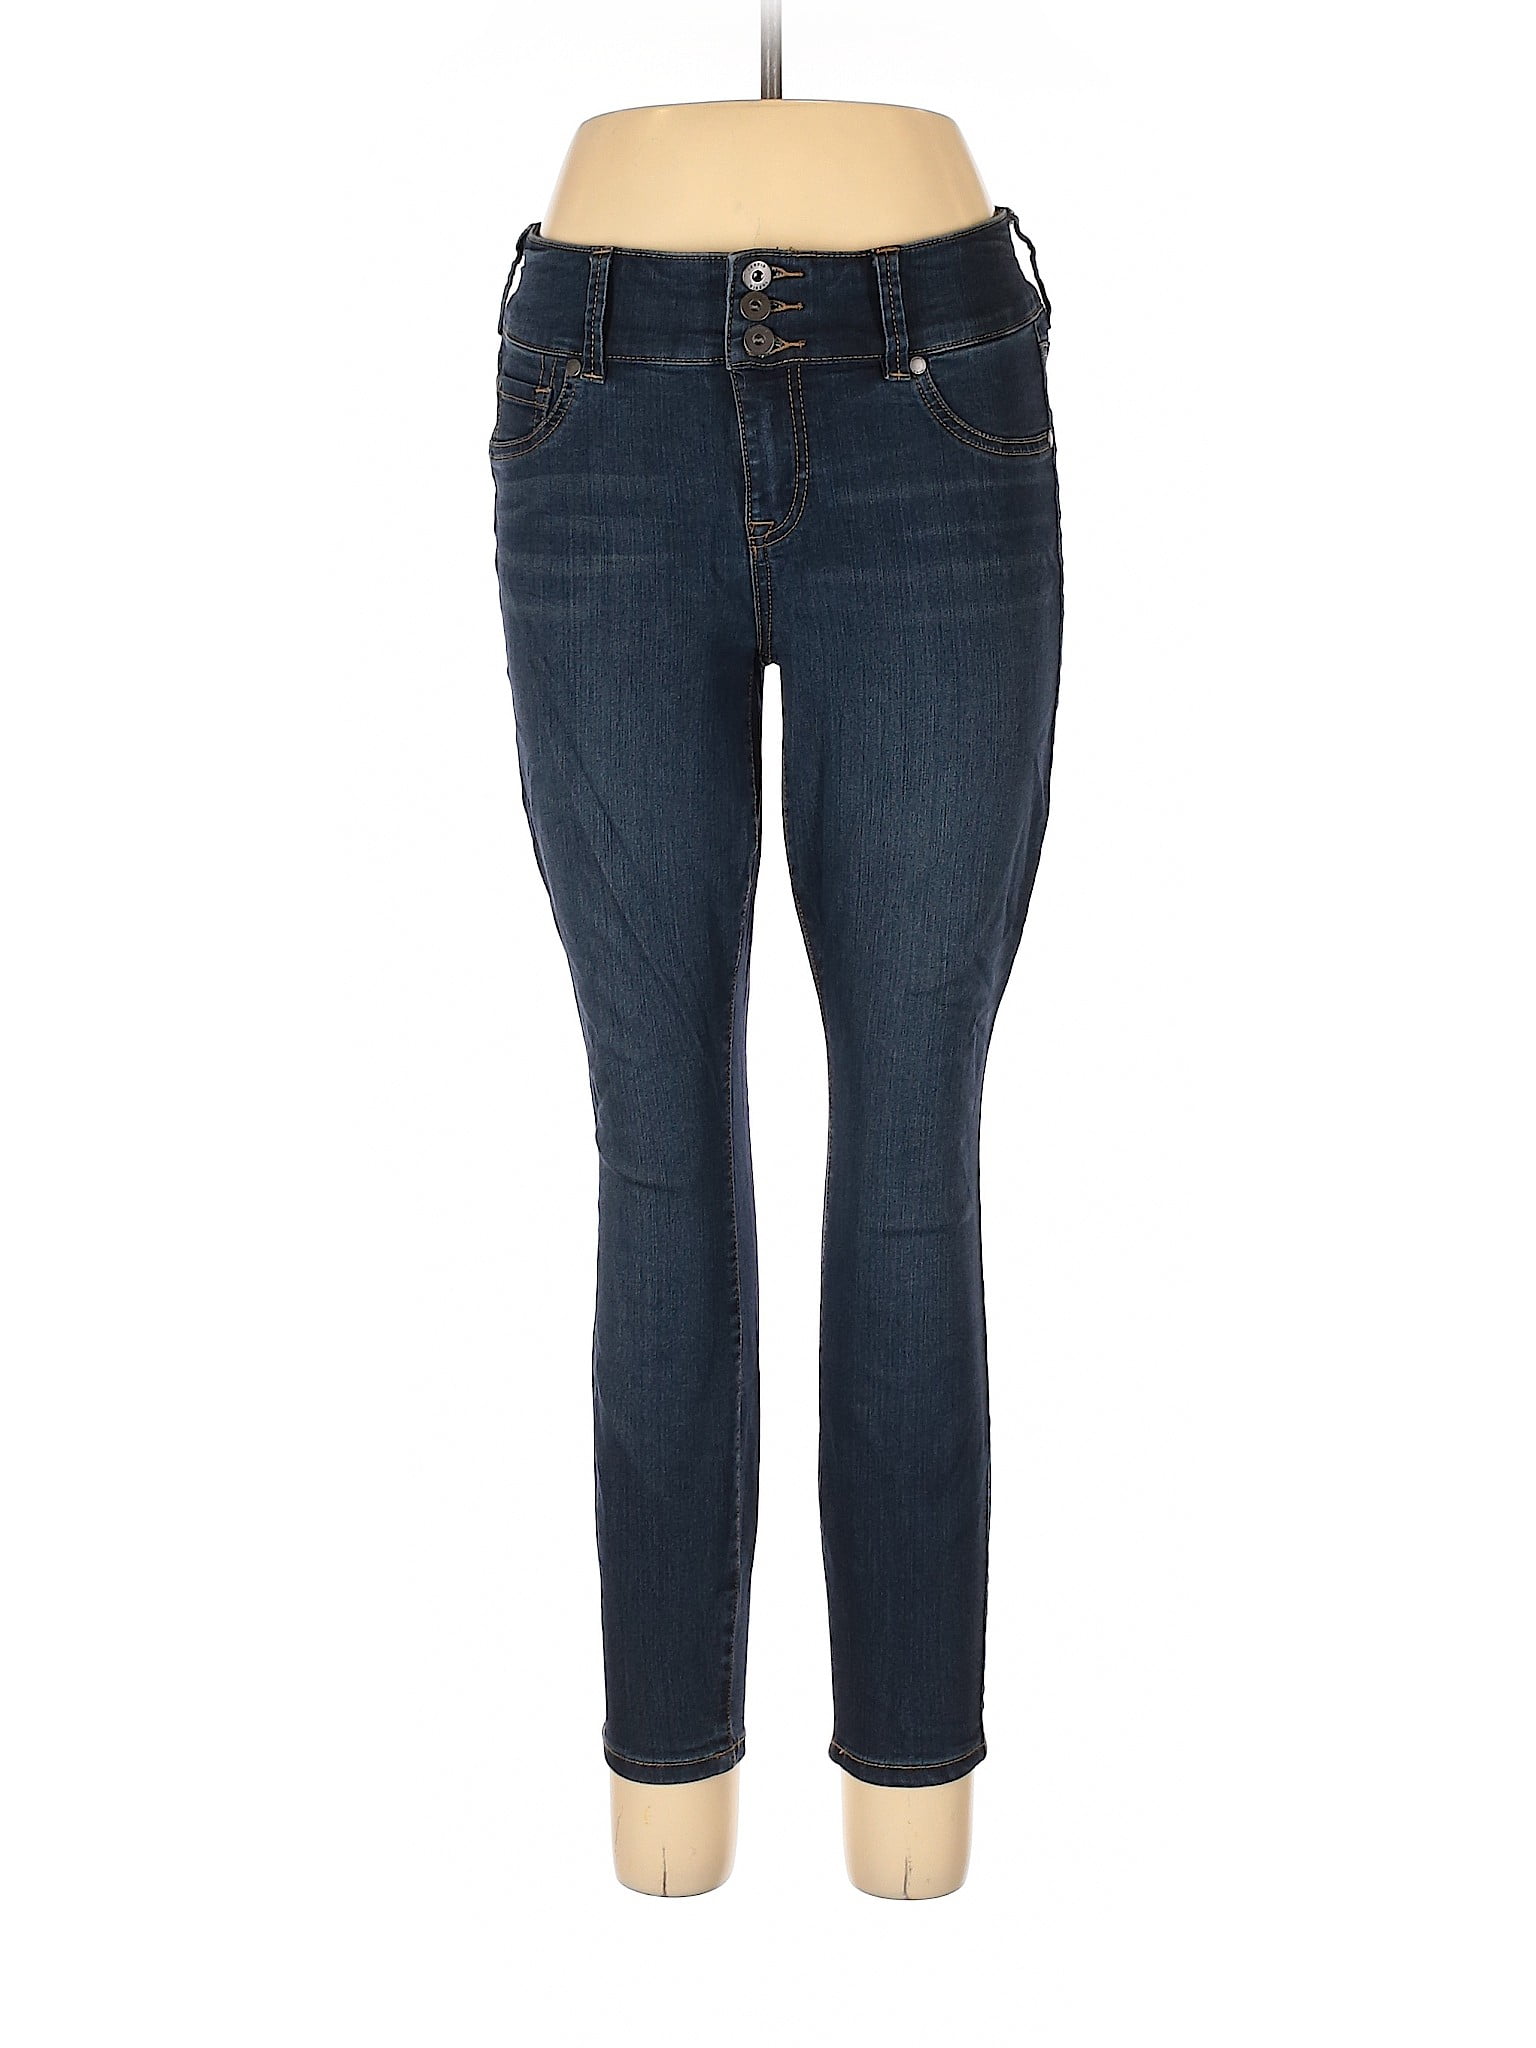 Torrid - Pre-Owned Torrid Women's Size 10 Plus Jeans - Walmart.com ...